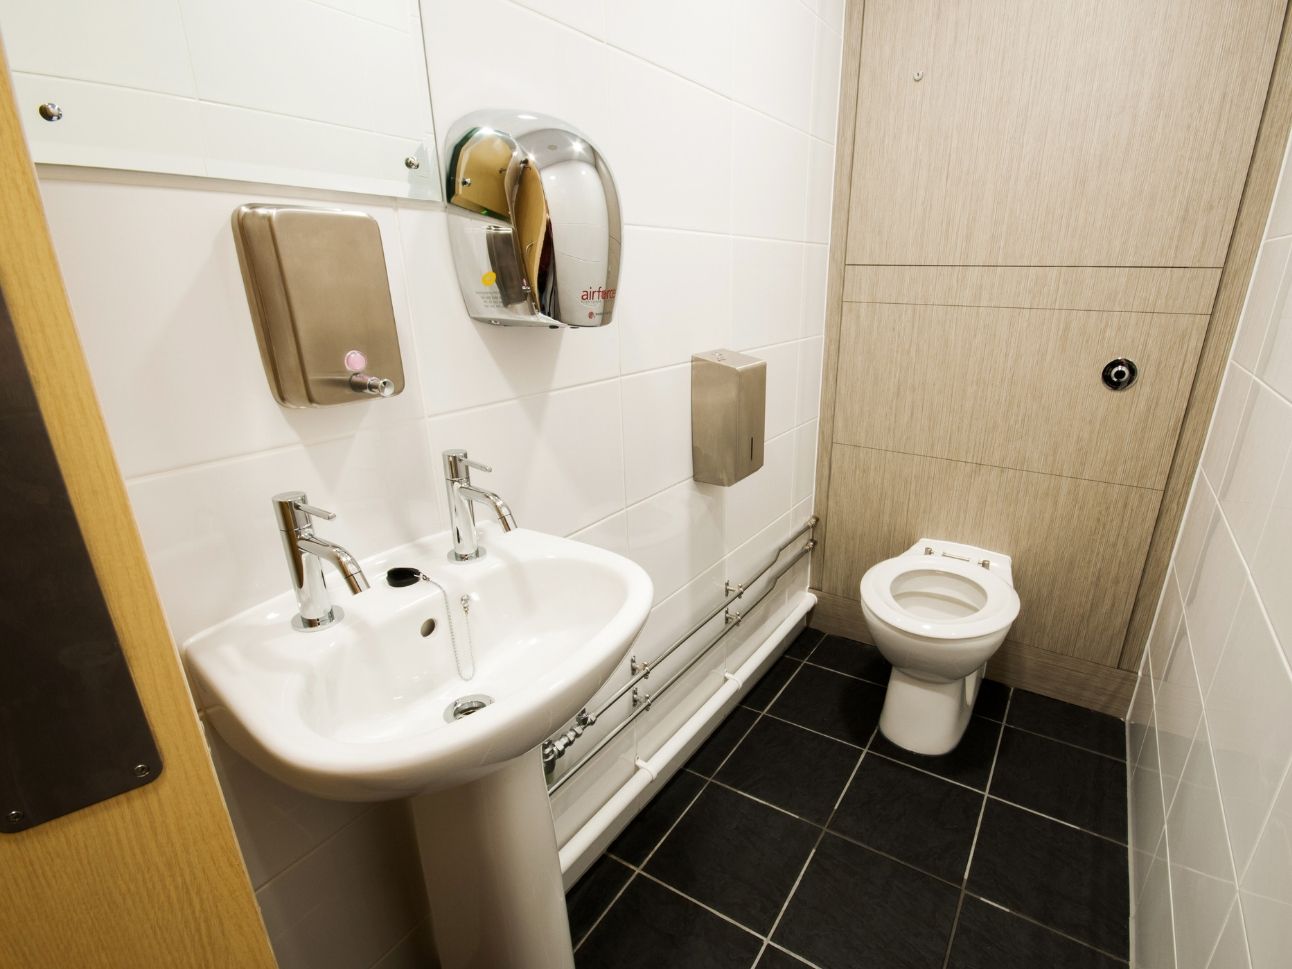 Subury Manor School Case Study | Commercial Washrooms